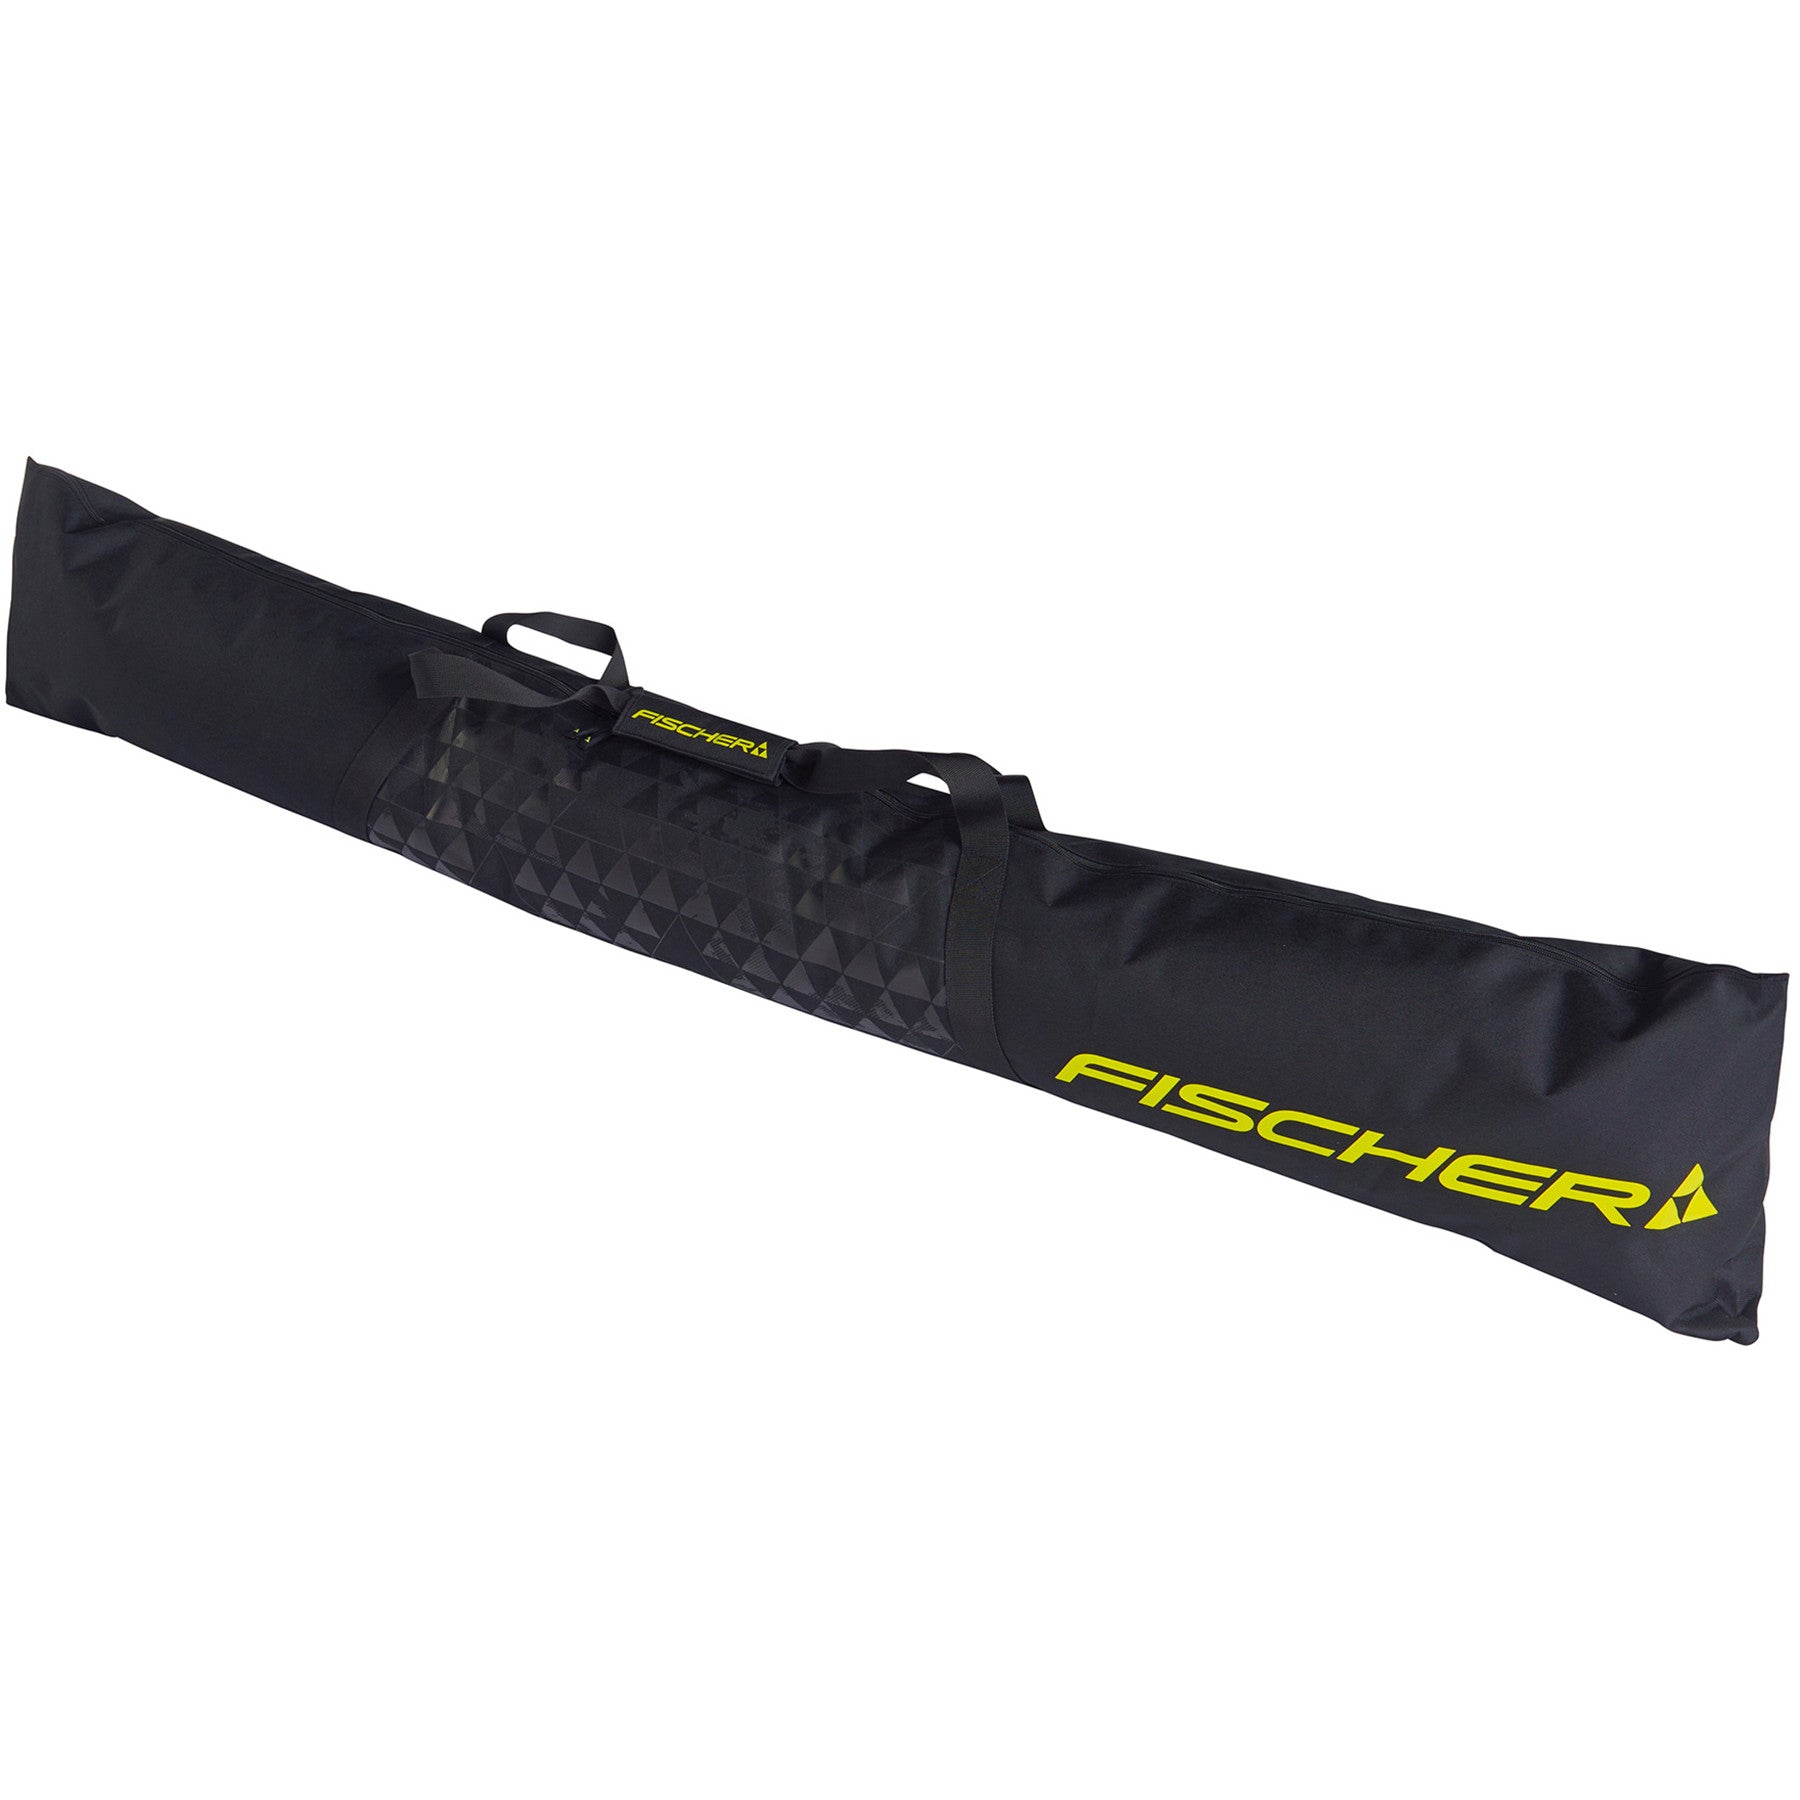 Fischer 1 pair  XC Economy Ski Bag 195